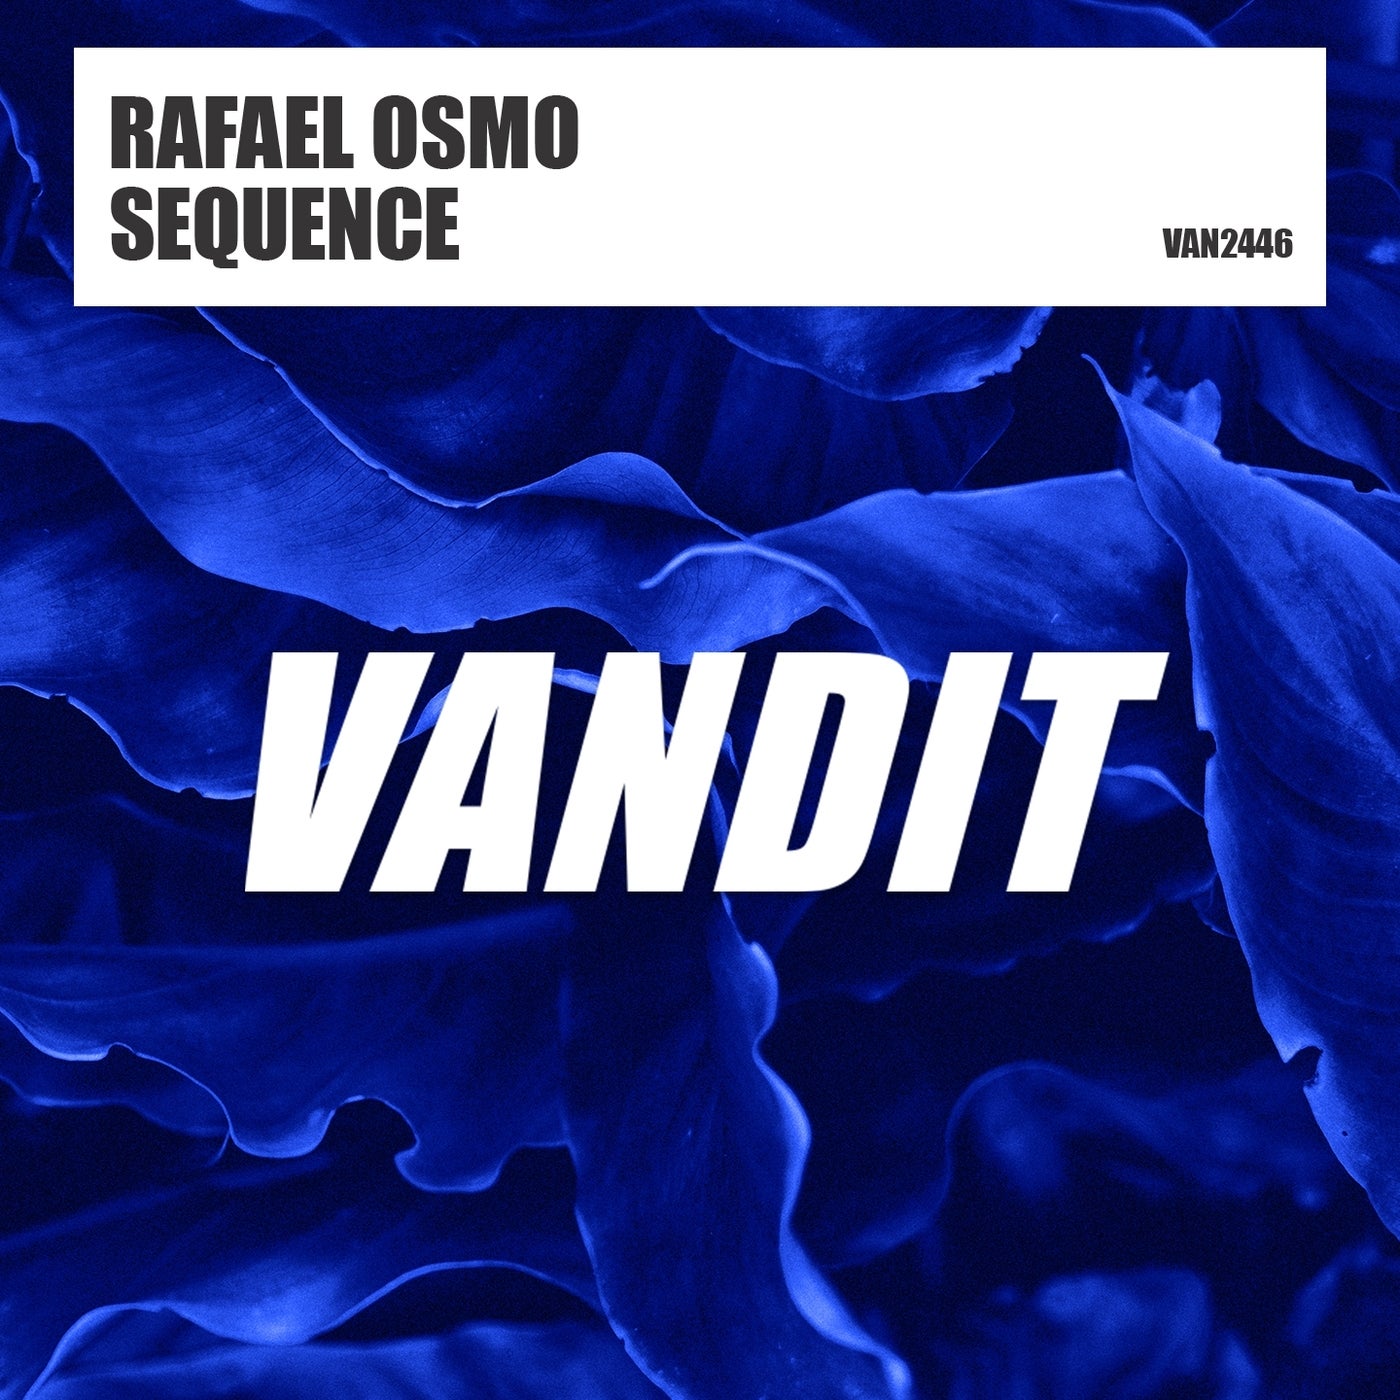 Rafael Osmo - Sequence [VAN2446]